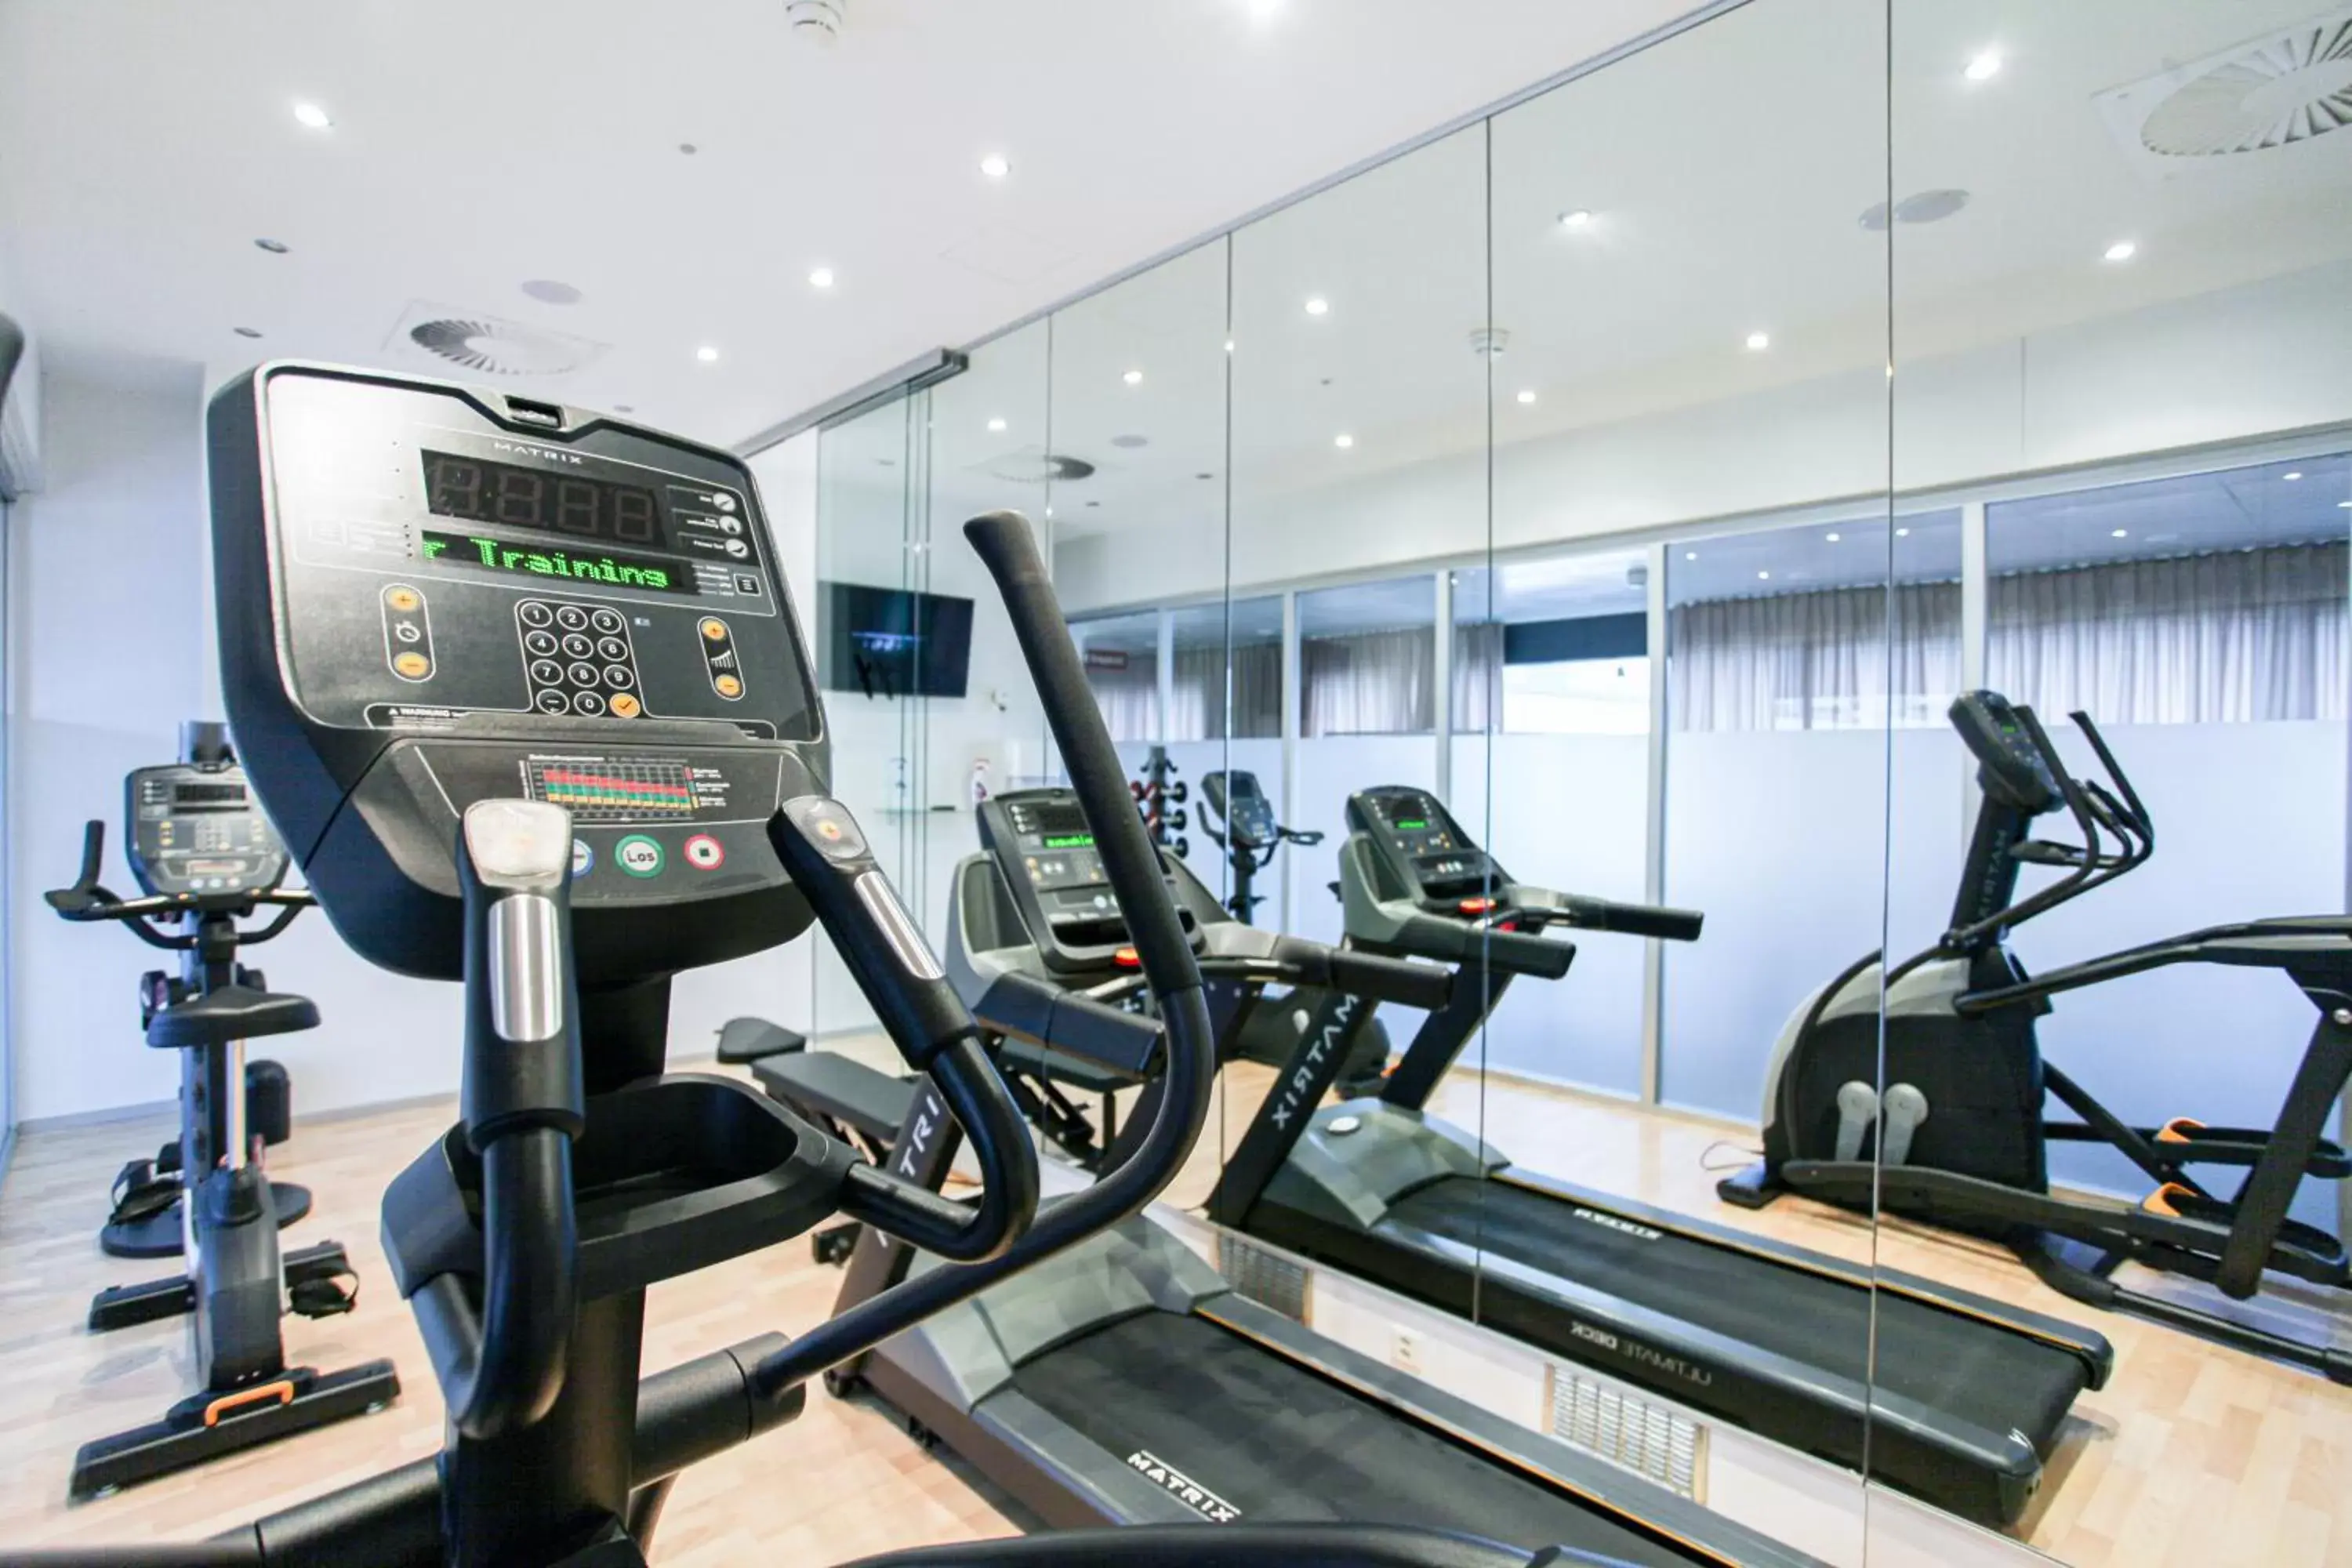 Fitness centre/facilities, Fitness Center/Facilities in Mercure Biel